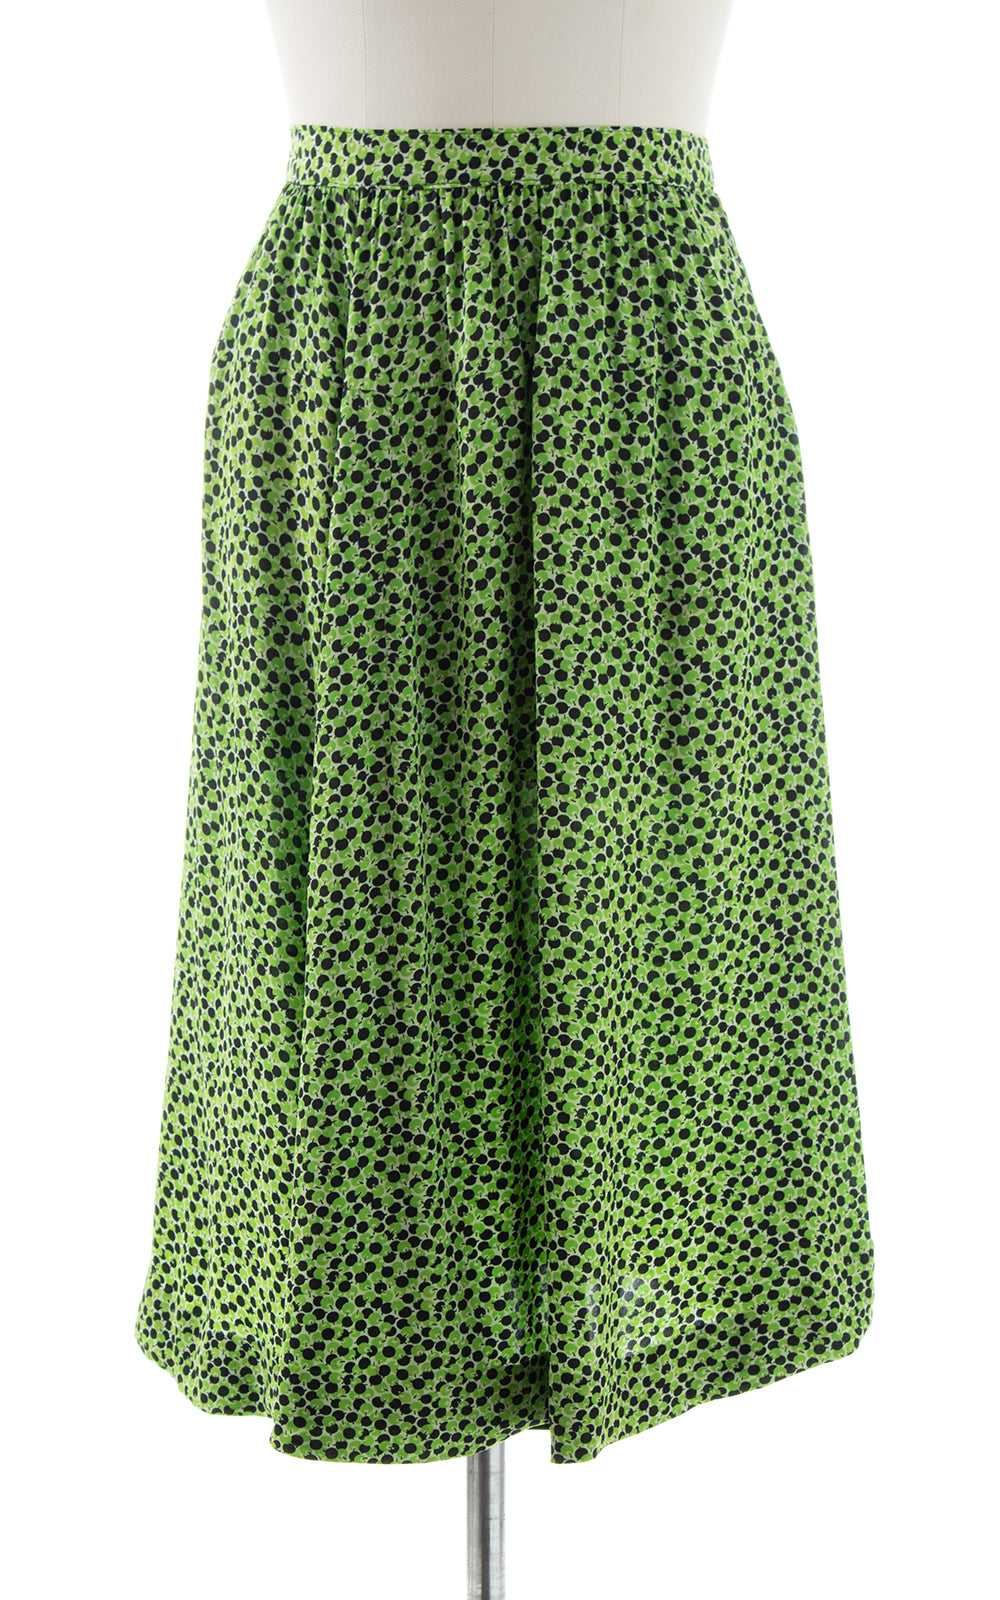 1940s Apples or Olives Novelty Print Rayon Skirt … - image 1